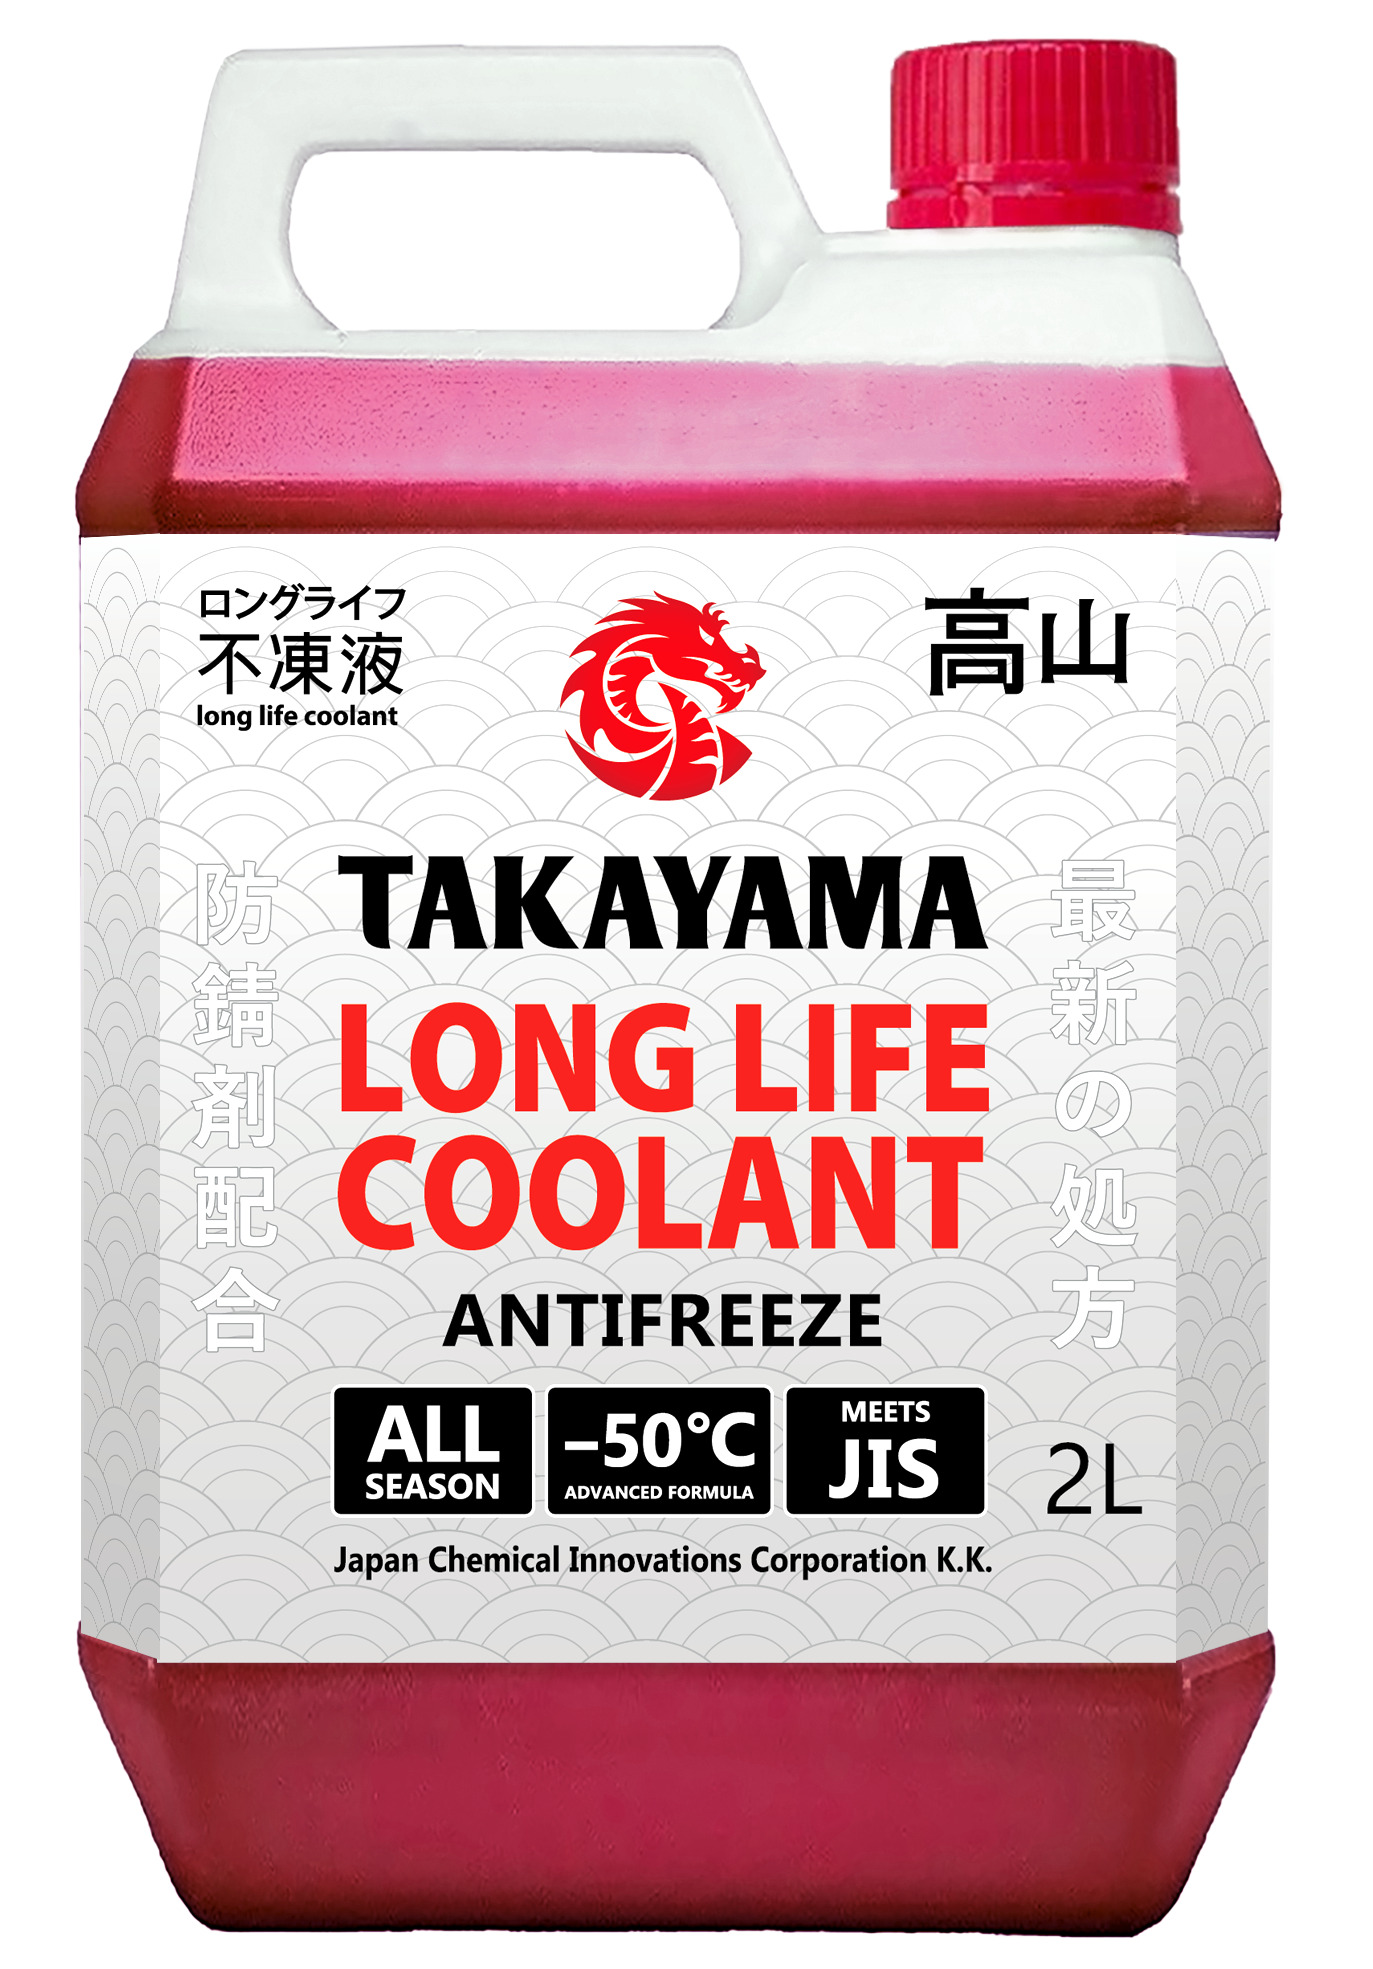 фото Антифриз takayama long life coolant красный -50c 2 л takayama арт. 700507